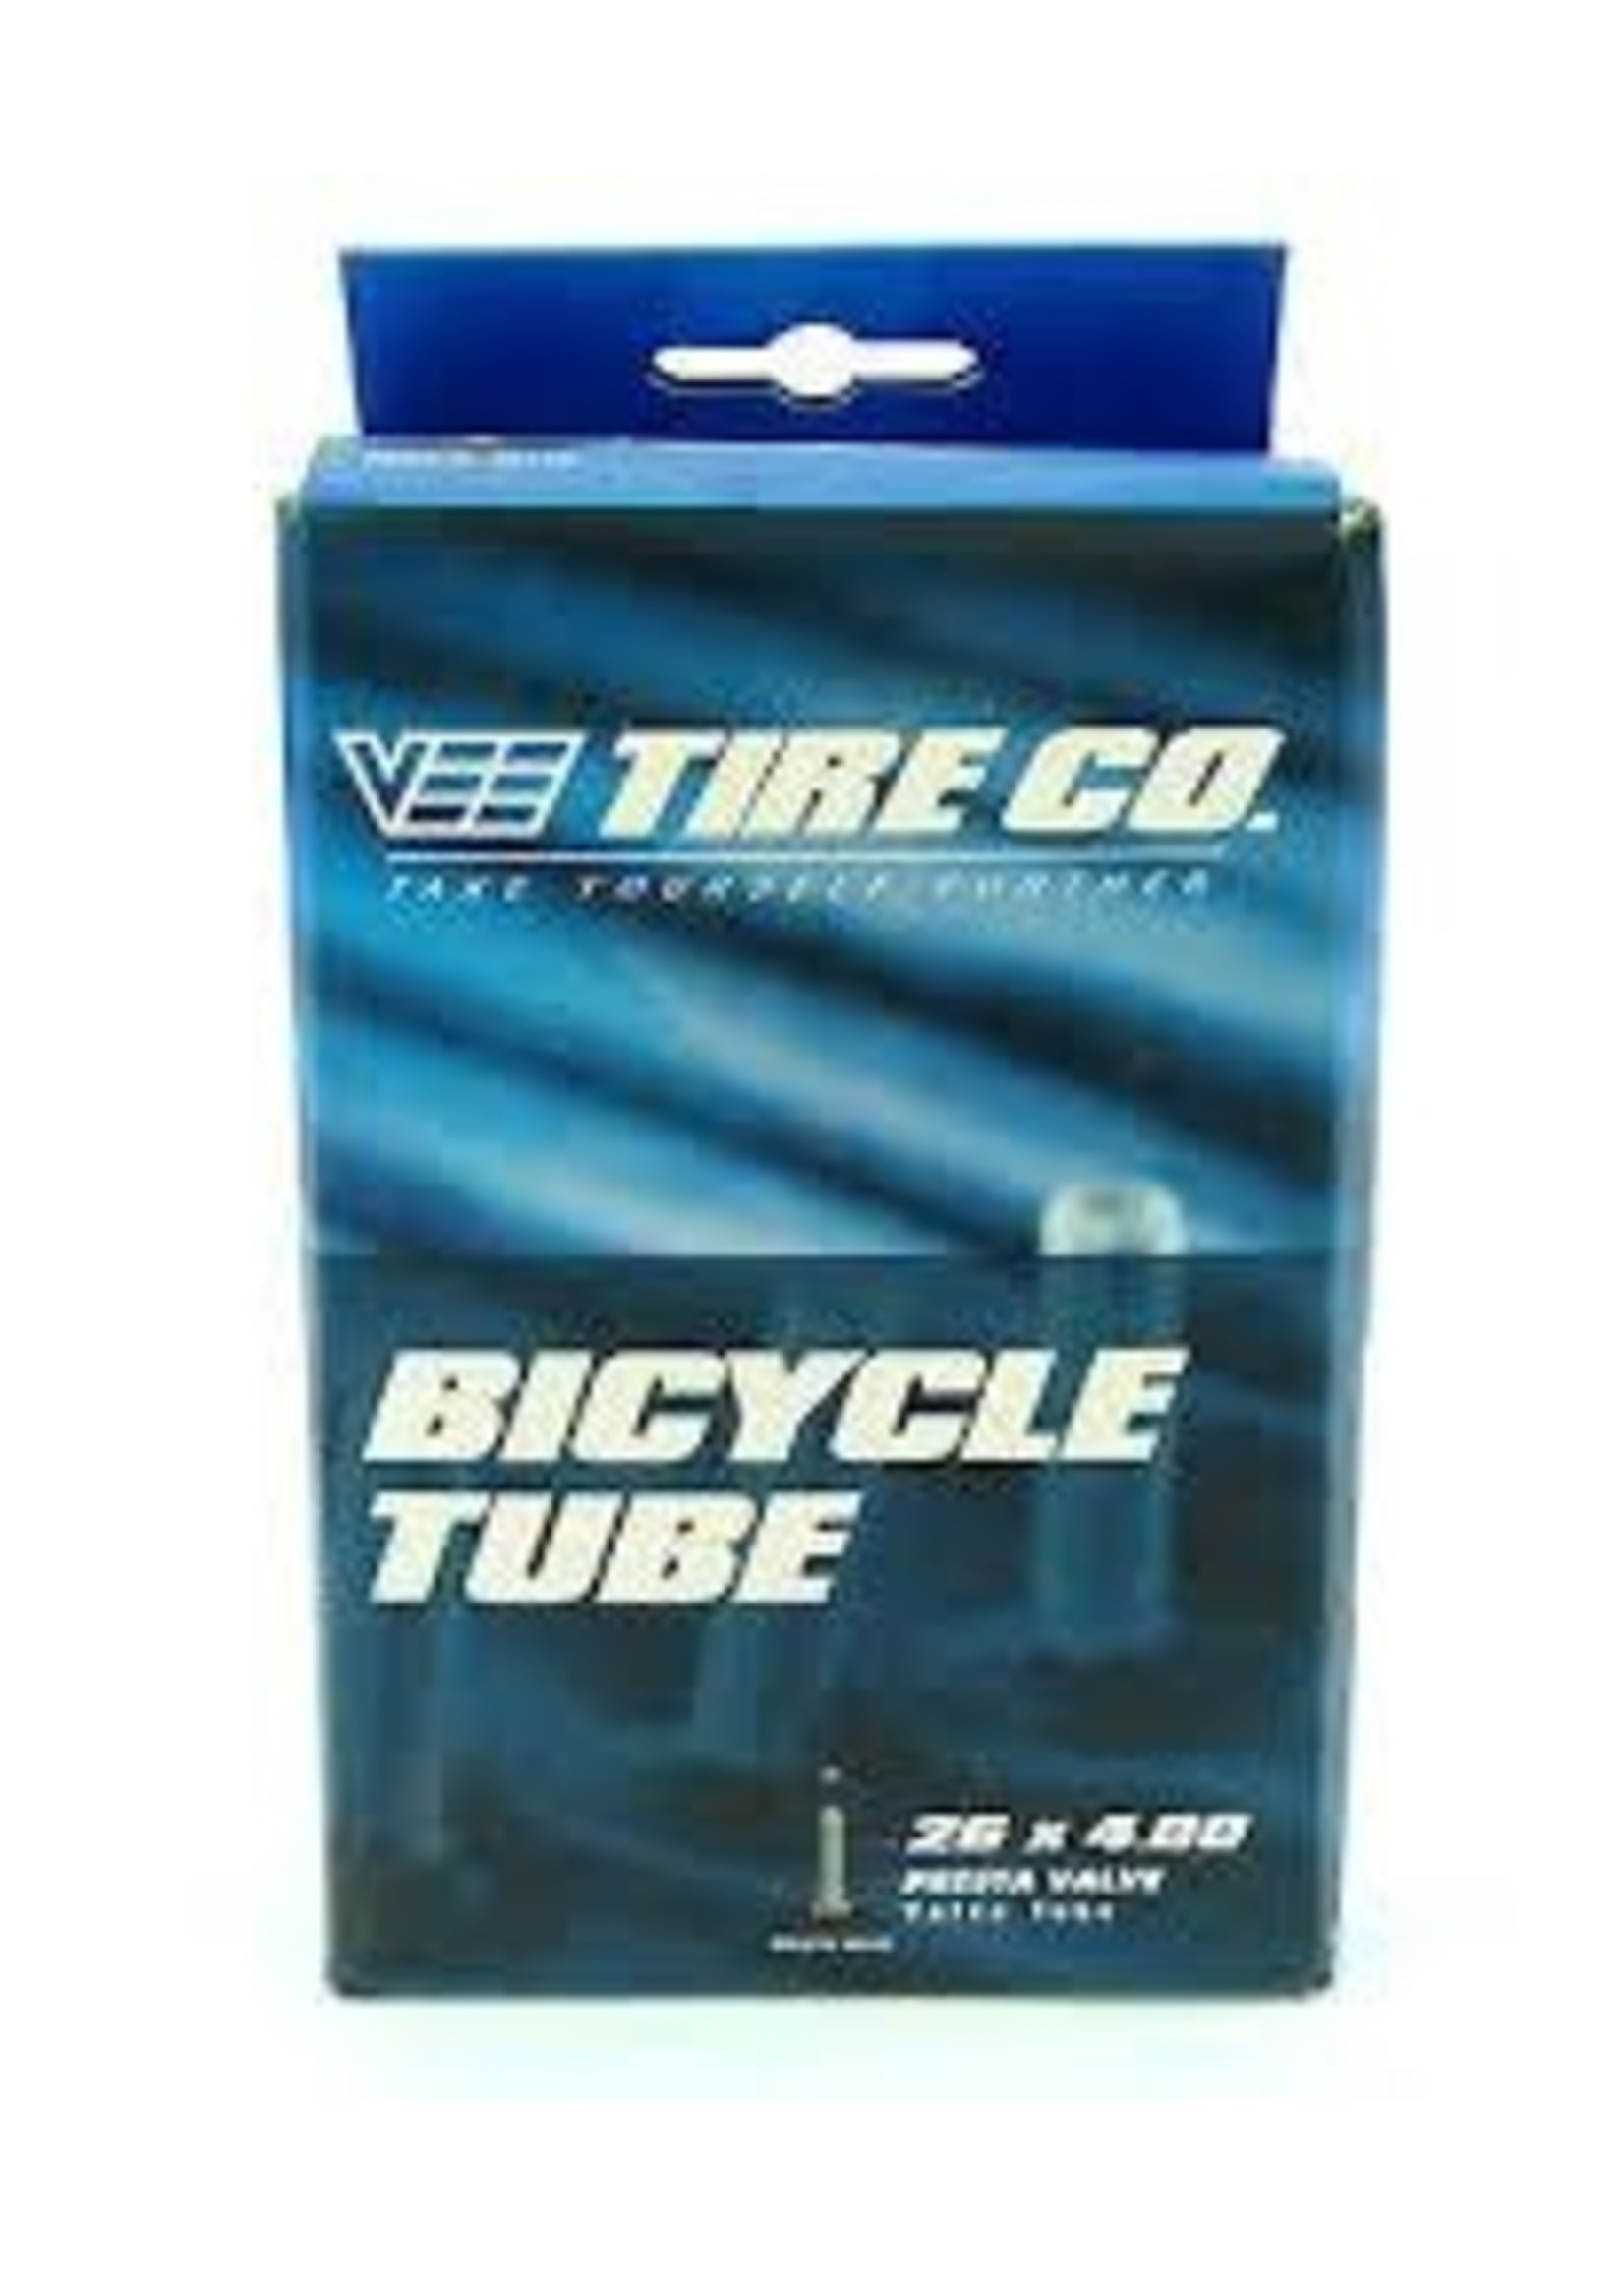 Vee Tire Co. VEE TIRE Co. FATBIKE 26B 26" x 4.25 - 4.8" PRESTA VALVE TUBE